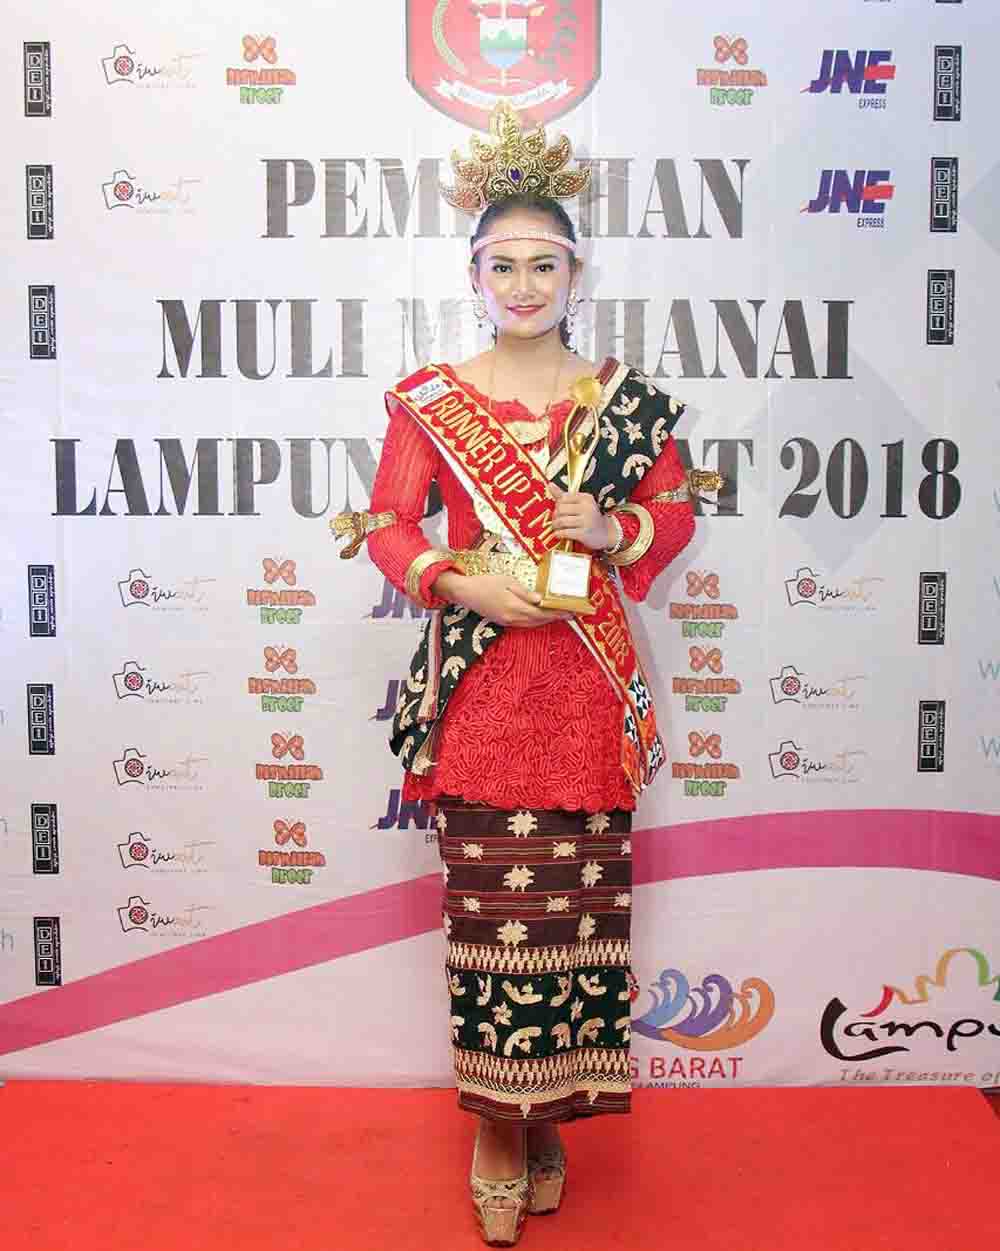 Duta Kampus IIB Darmajaya Raih Juara II Muli Lampung Barat